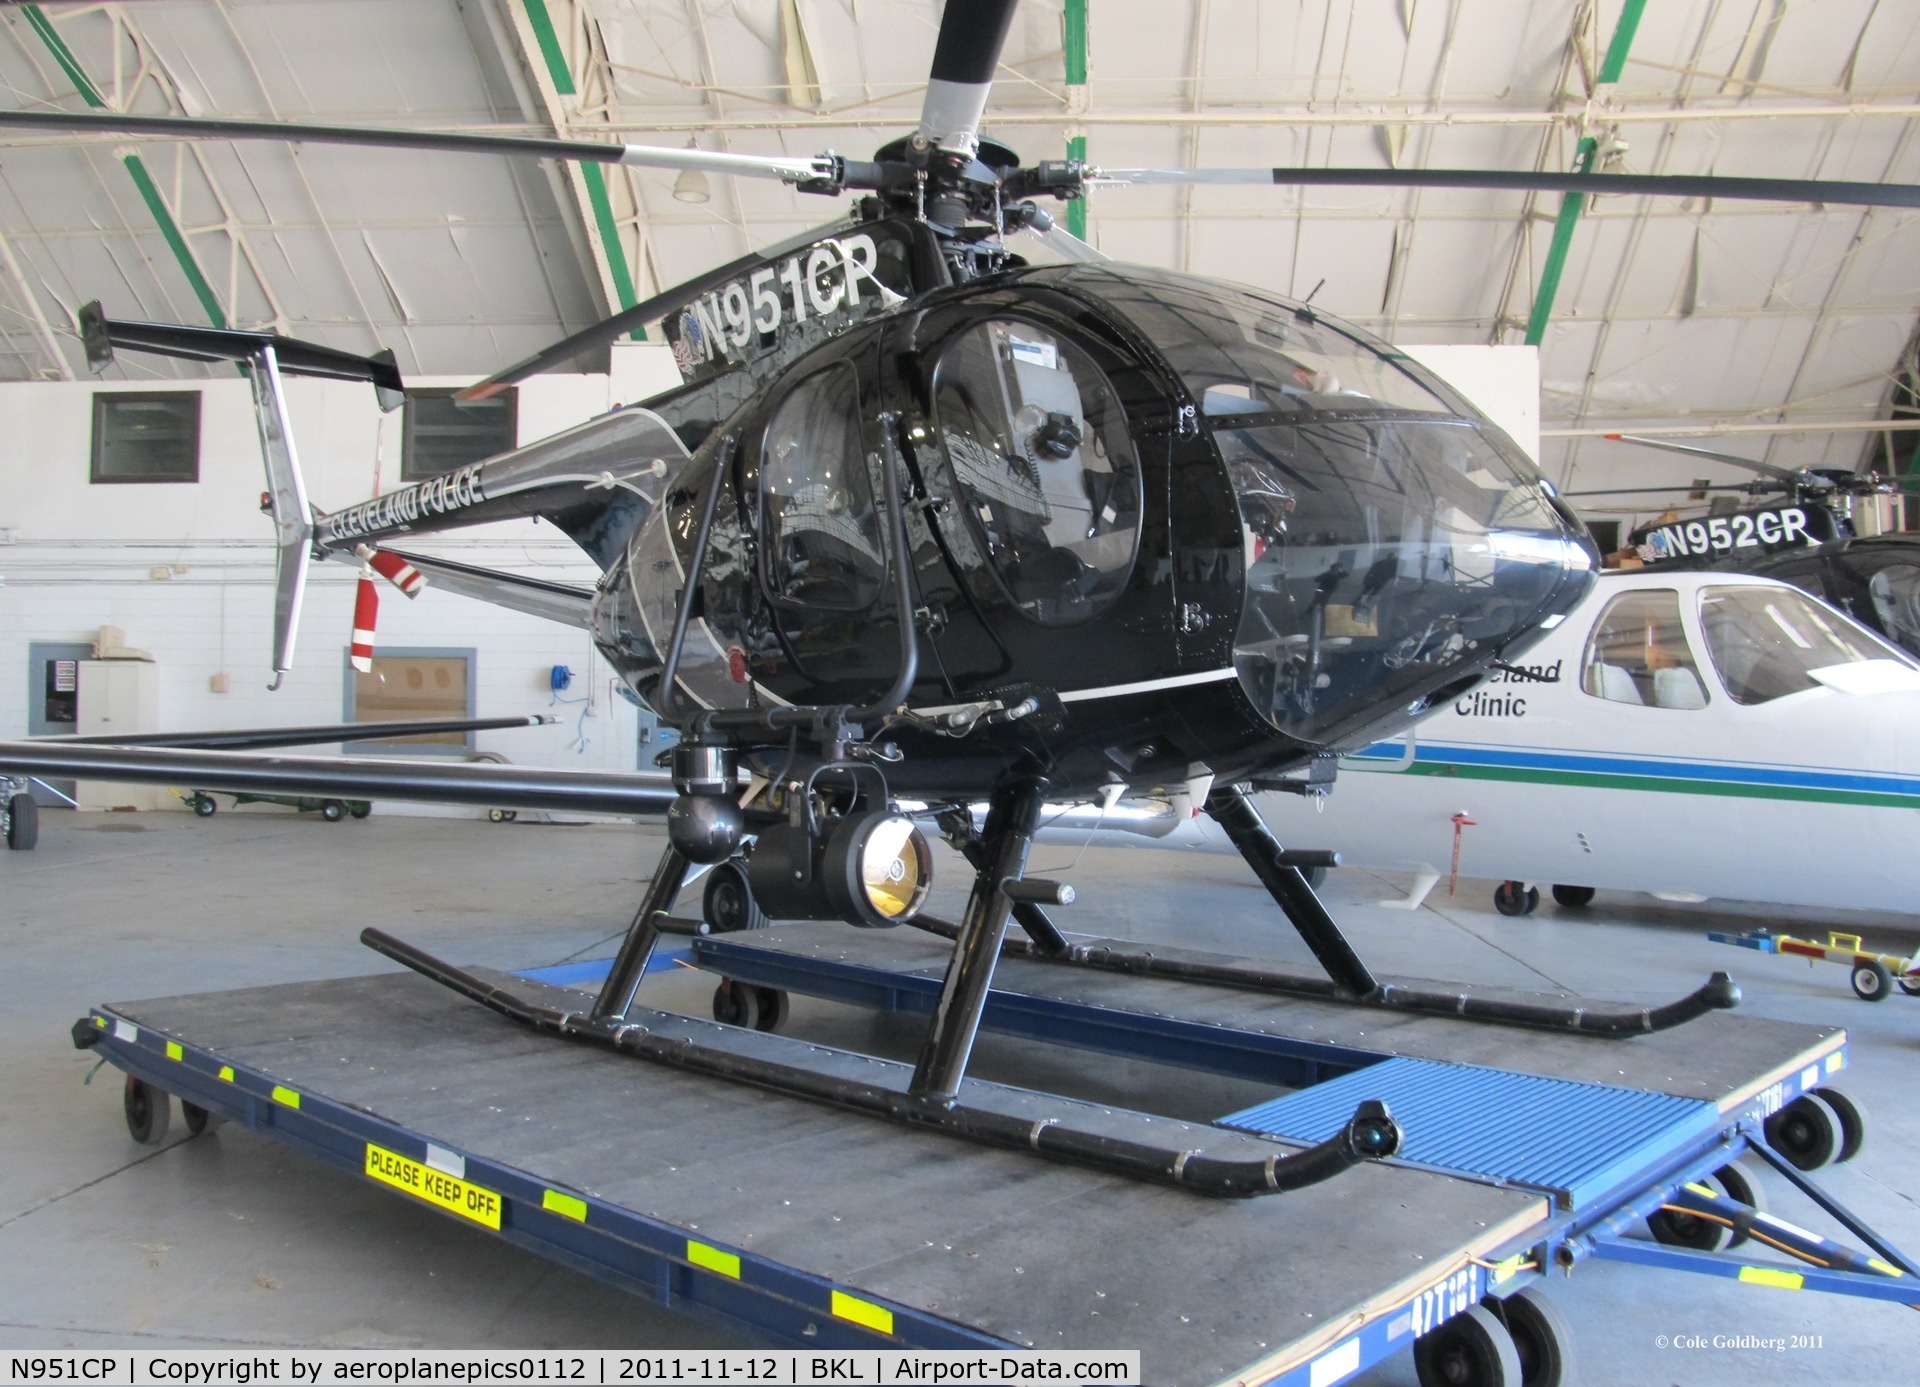 N951CP, 2000 MD Helicopters 369E C/N 0549E, N951CP  seen in the Landmark Aviation Hangar at Burke Lakefront.